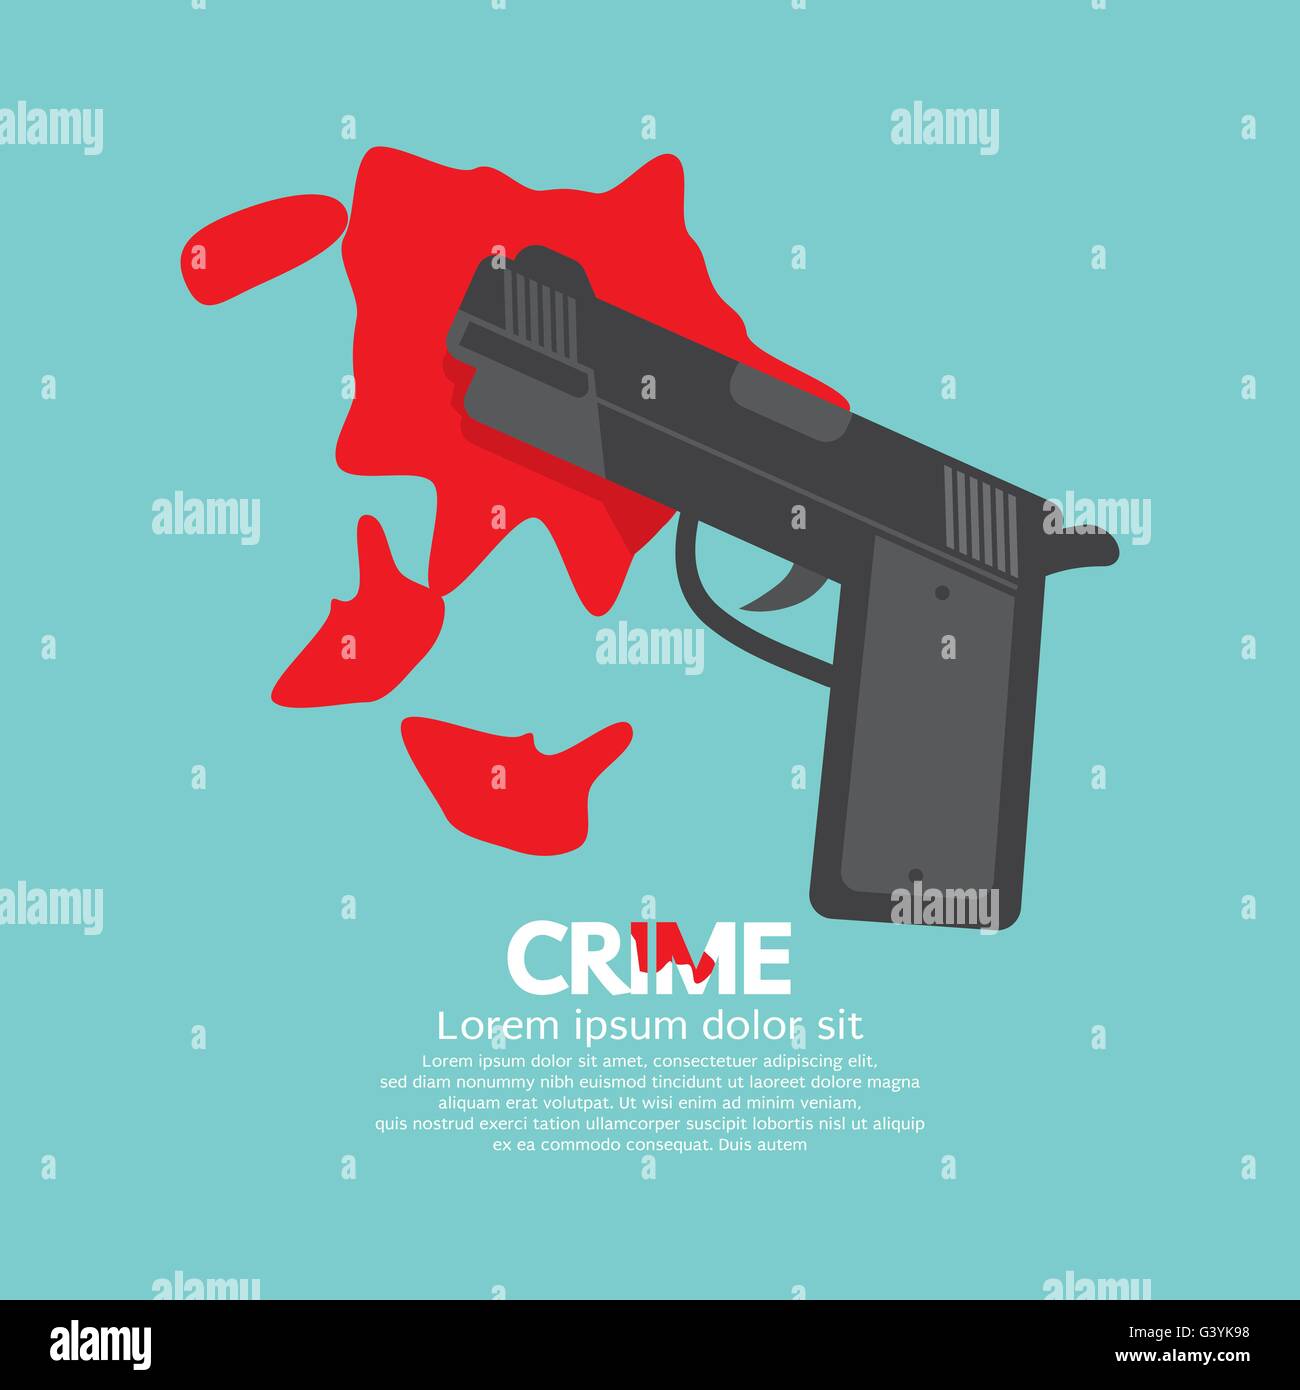 https://c8.alamy.com/comp/G3YK98/bloody-gun-criminal-concept-vector-illustration-G3YK98.jpg